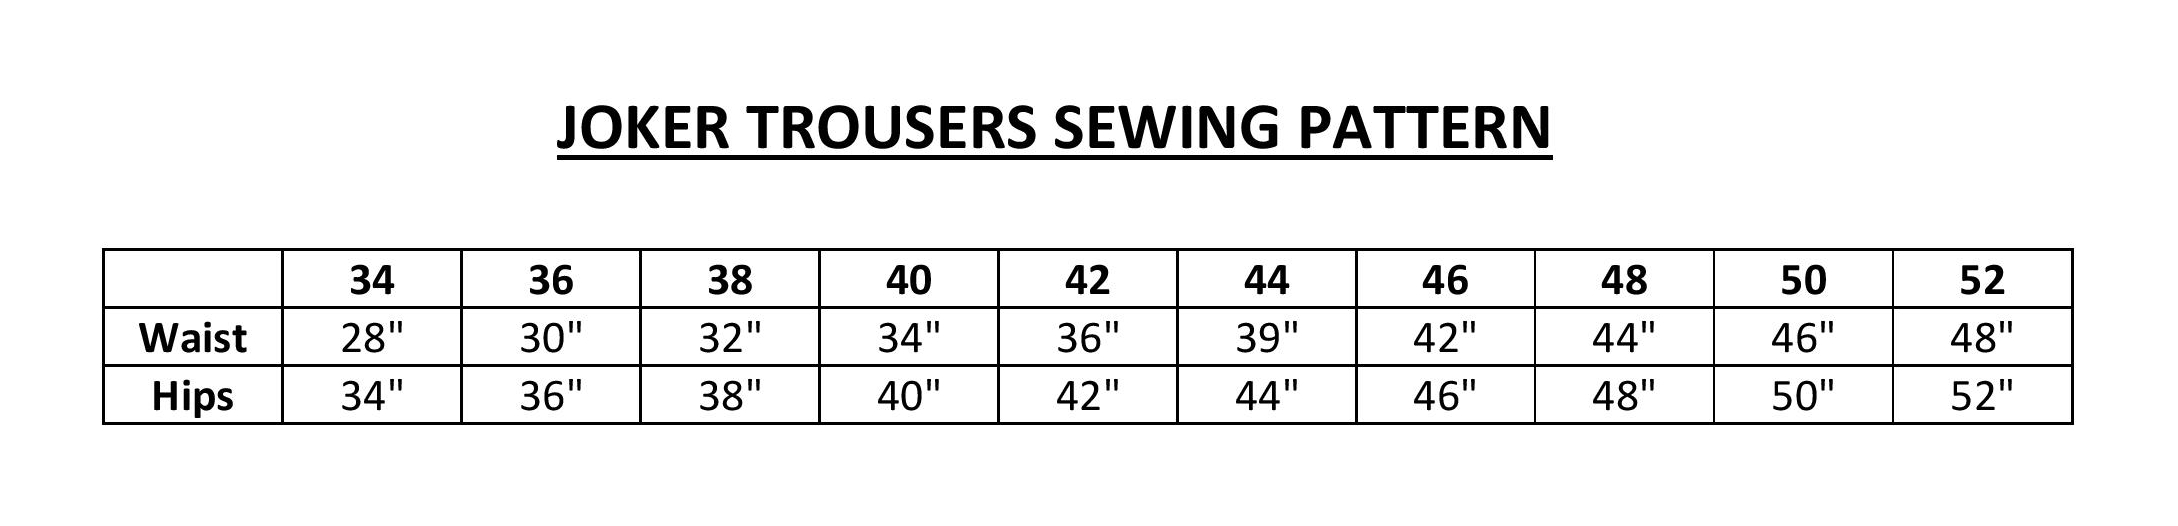 Joker trousers sewing pattern sizing chart - Tailors Gone Wild